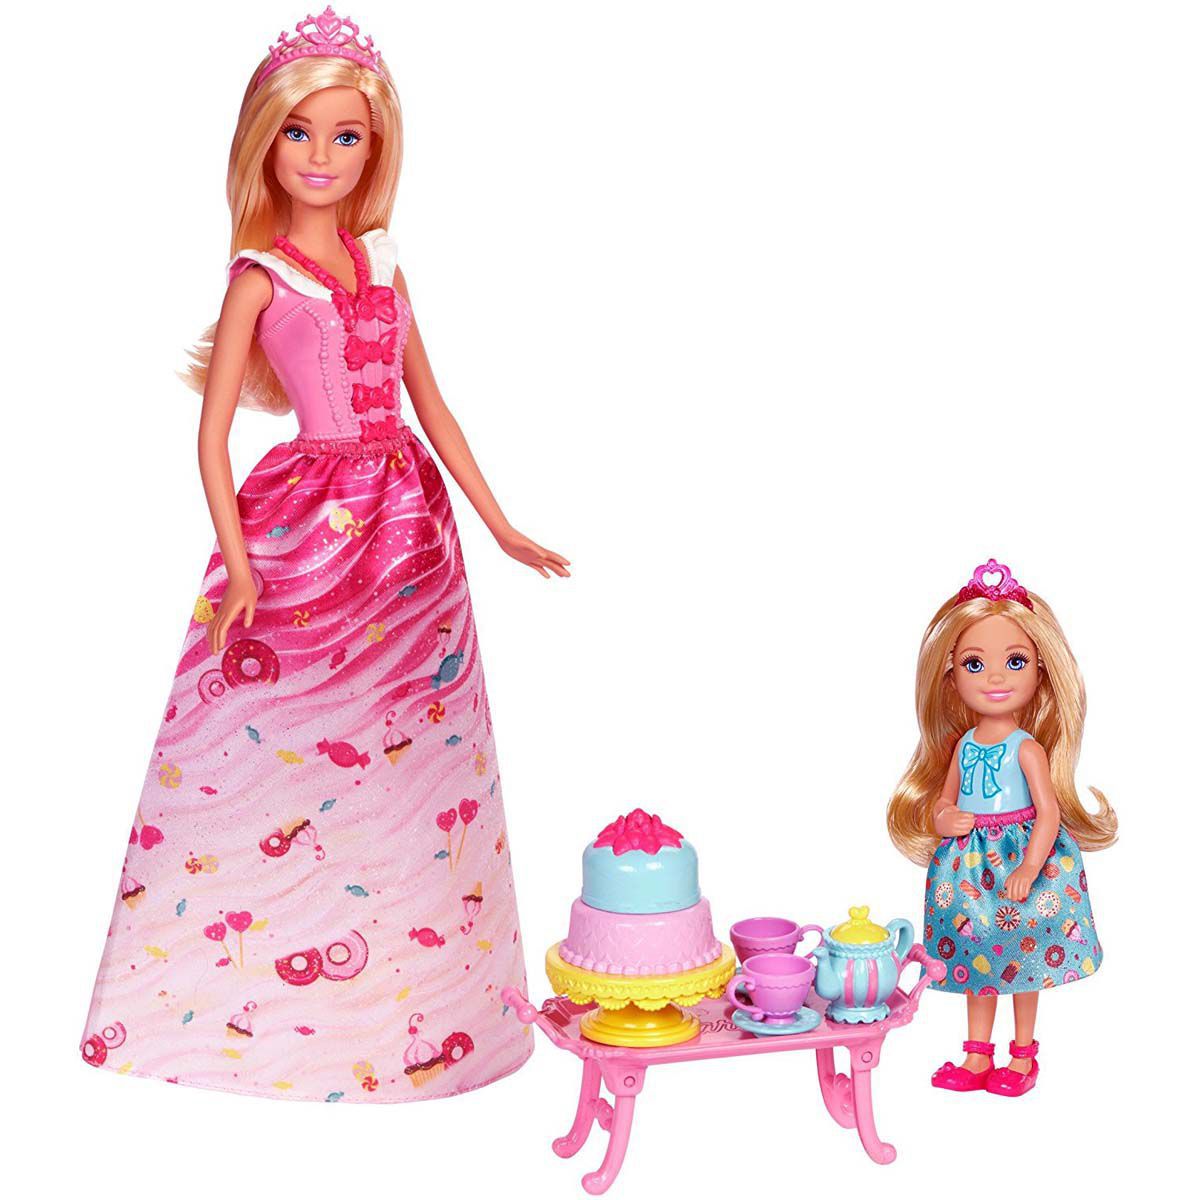 Barbie Dreamtopia Princess Tea Party Doll Set Multi Color Buy Barbie